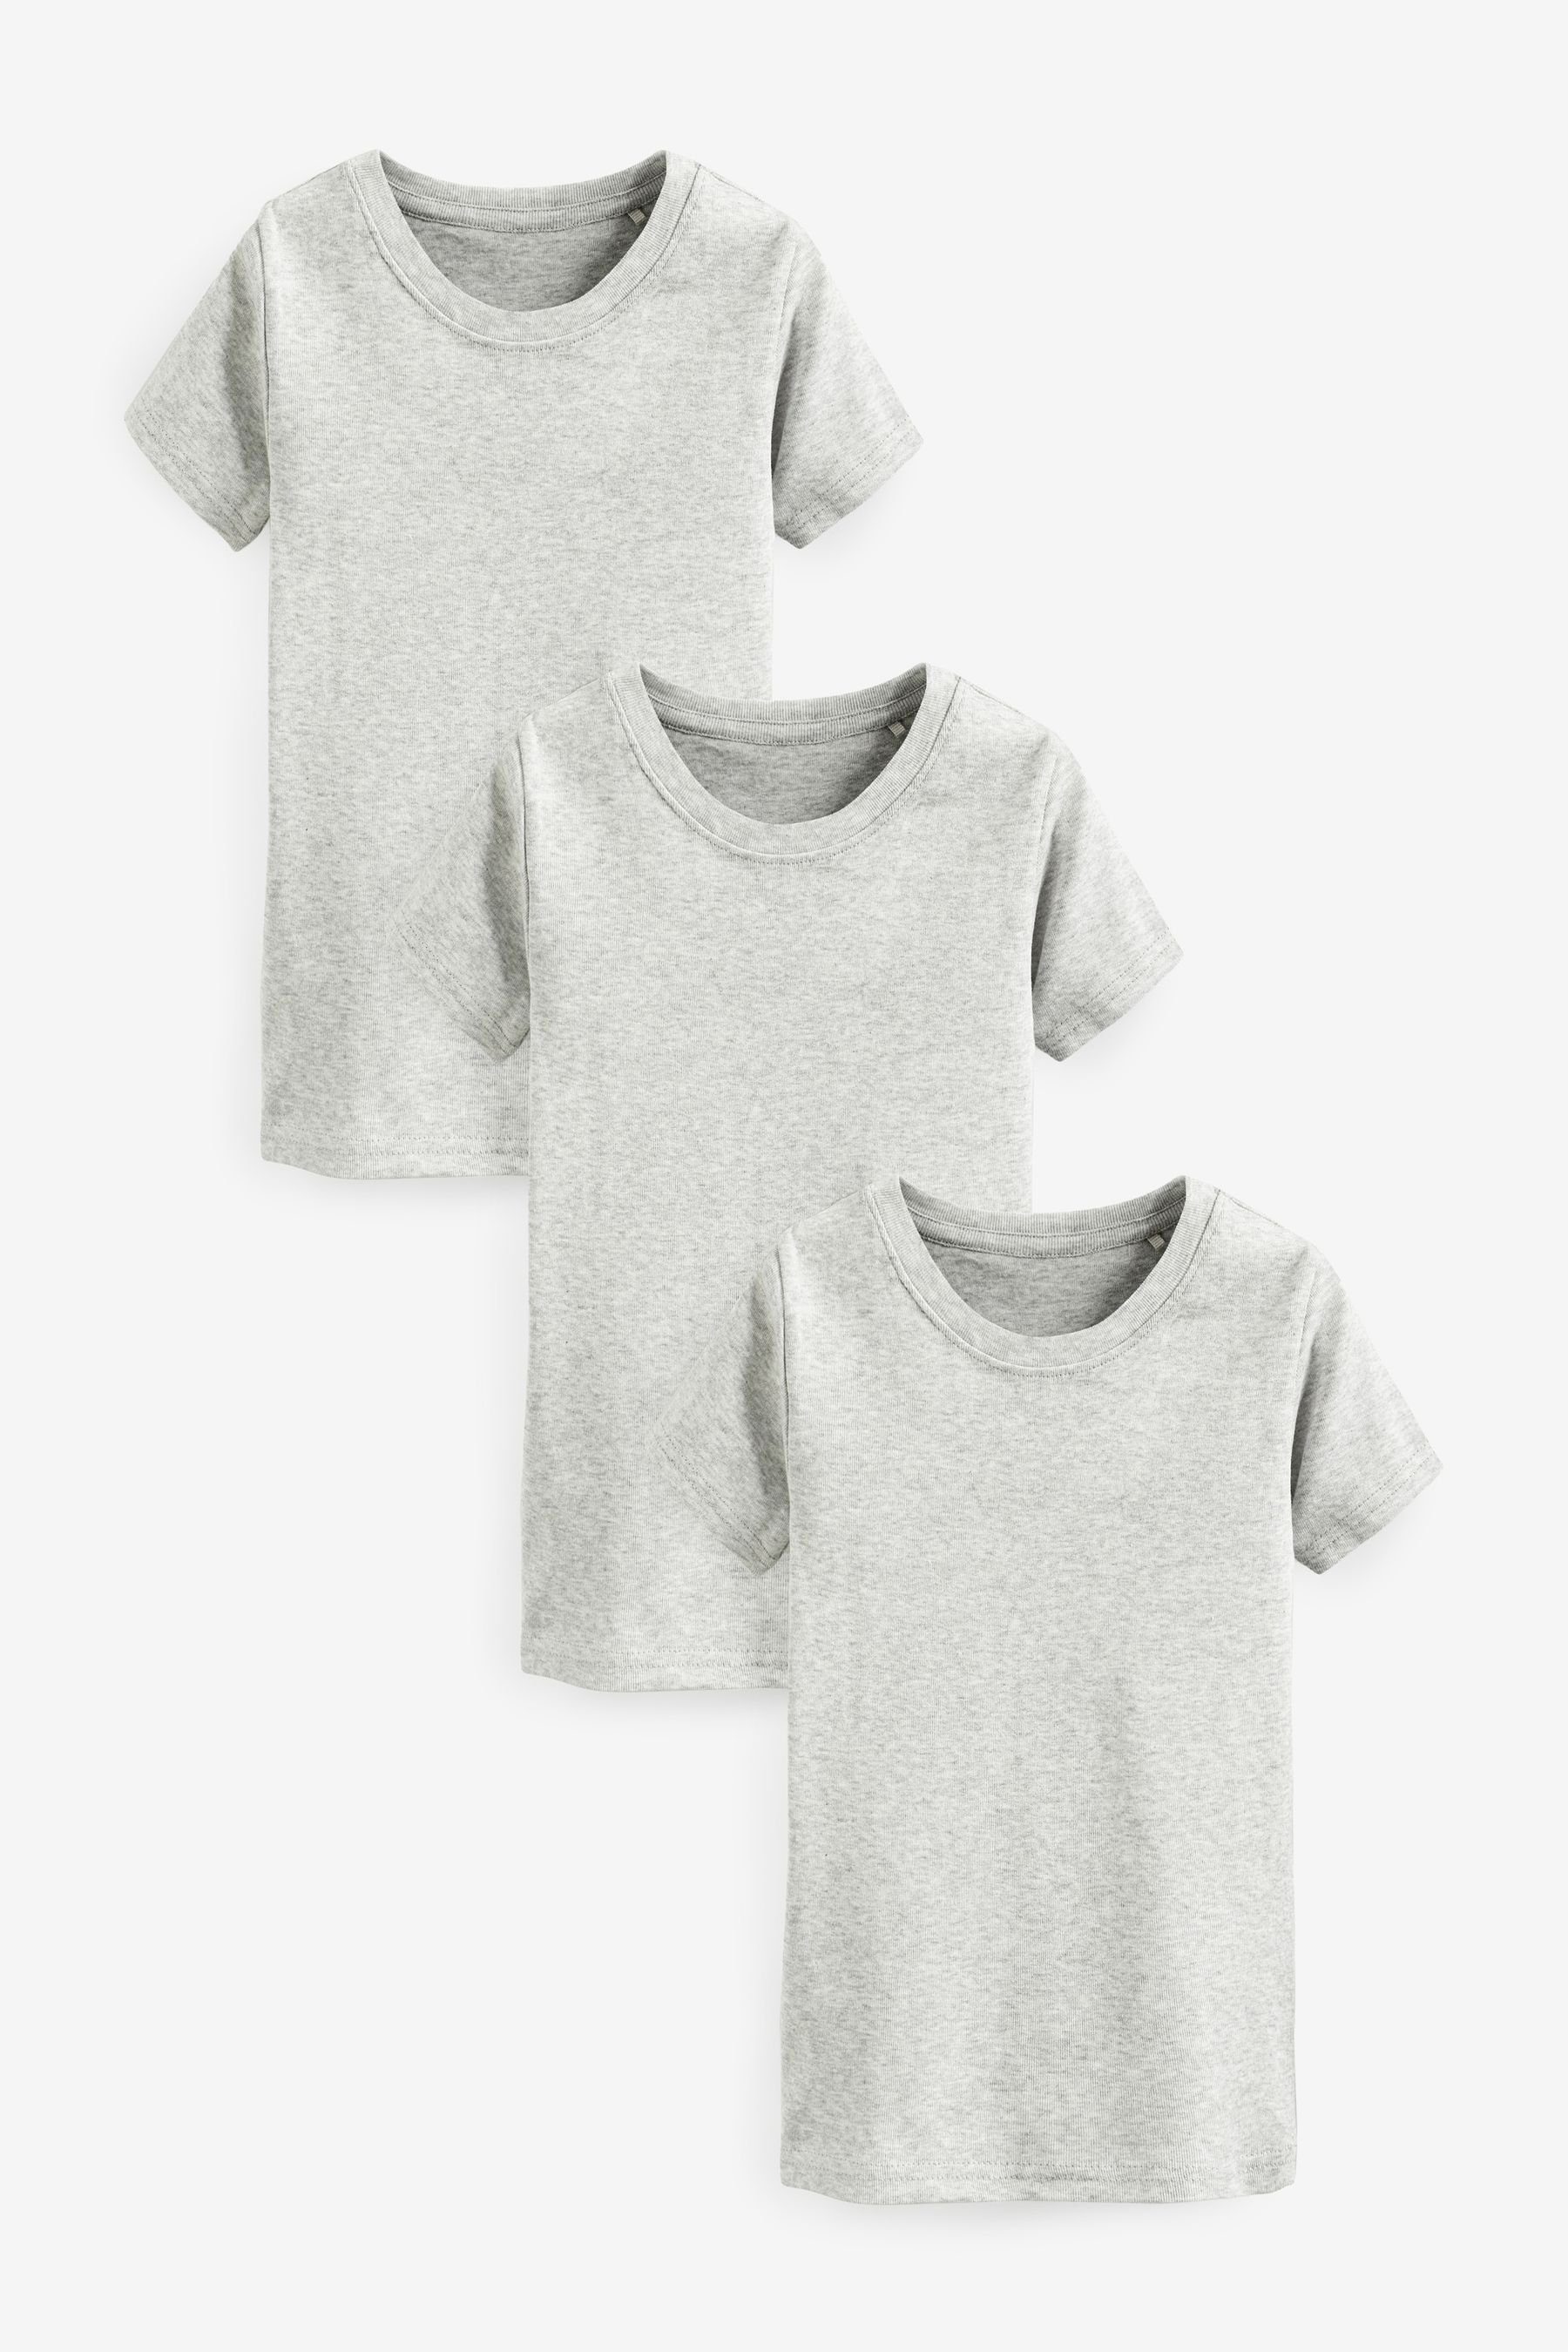 Next Unterhemd T-Shirts im 3er-Pack (3-St)